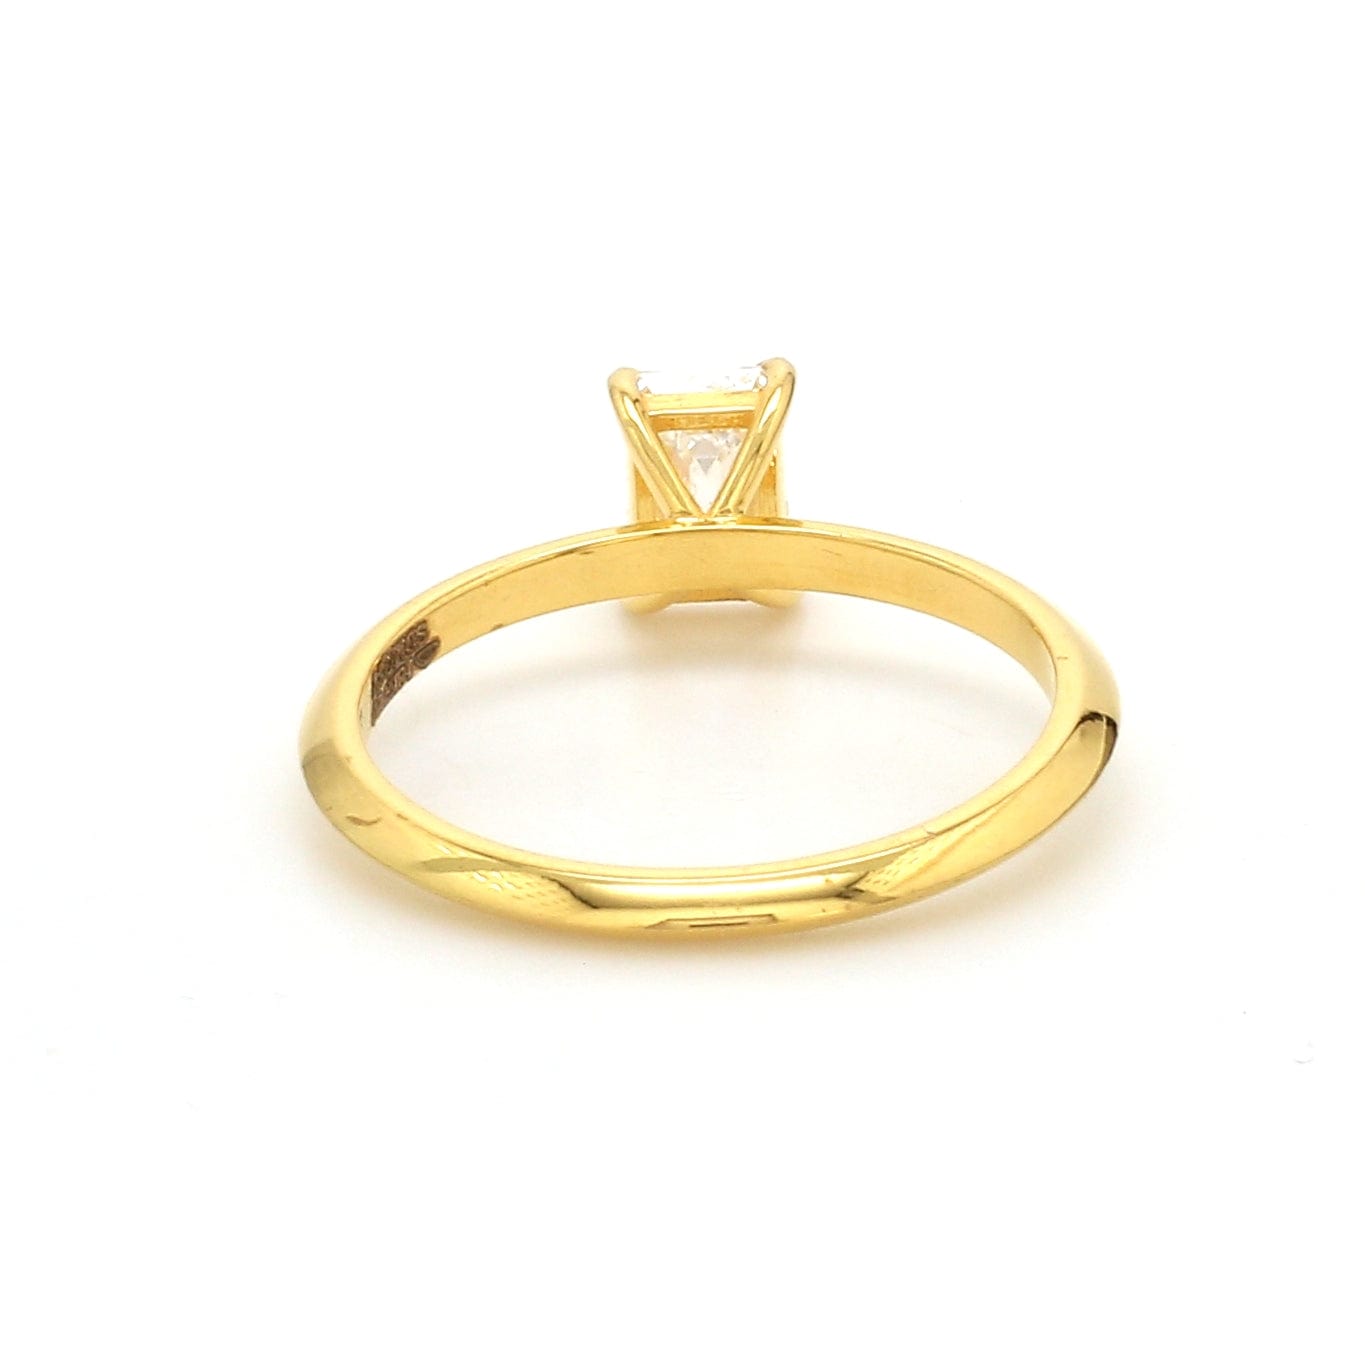 Elegant 18k yellow gold plated Rings Women Cubic Zirconia Jewelry Size 6-10  | eBay